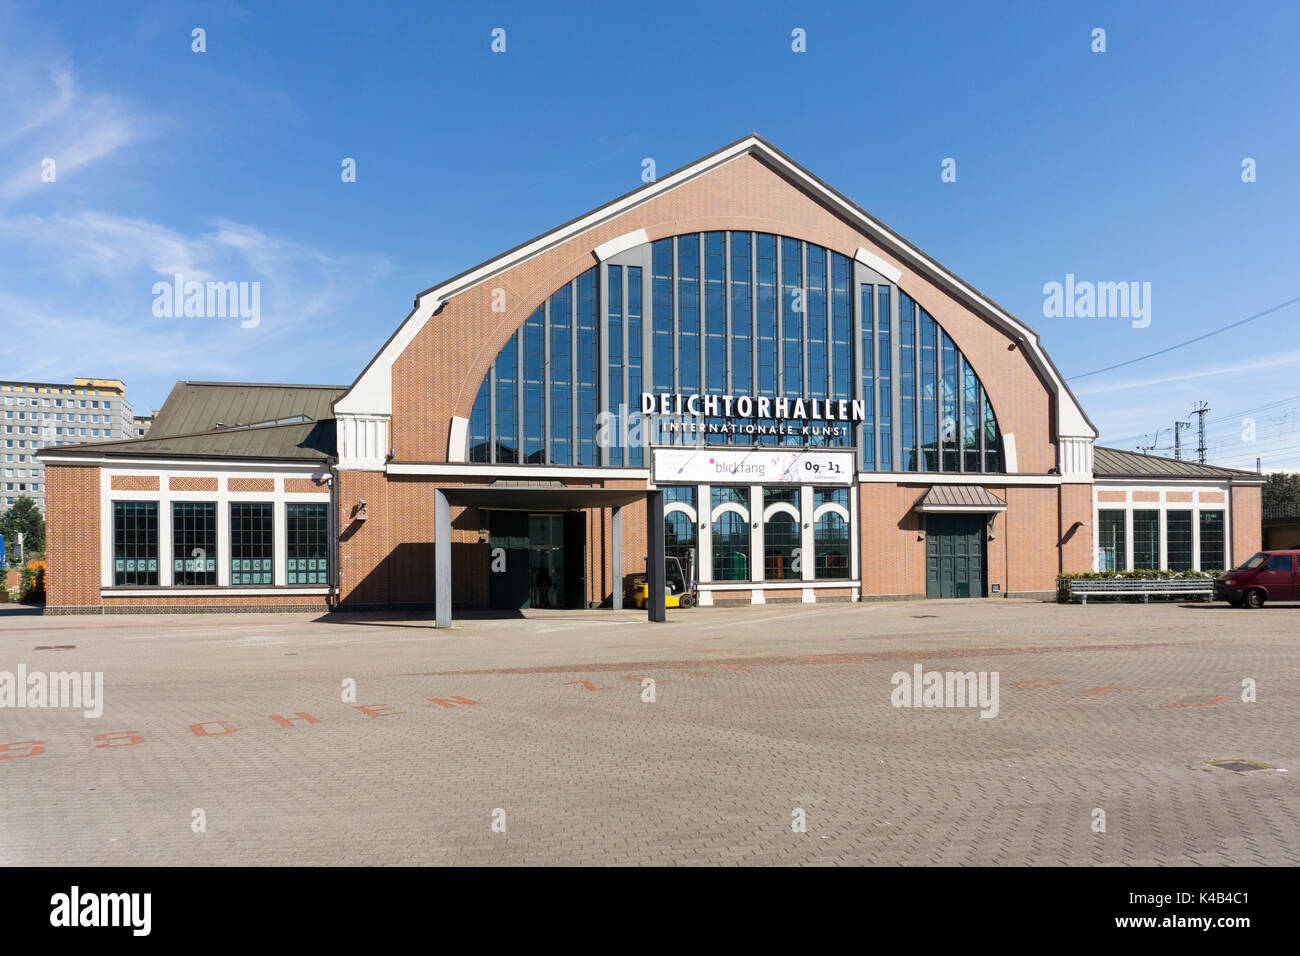 Deichtorhallen, Art Center, Hanseatic City Of Hamburg, Germany, Europe Stock Photo